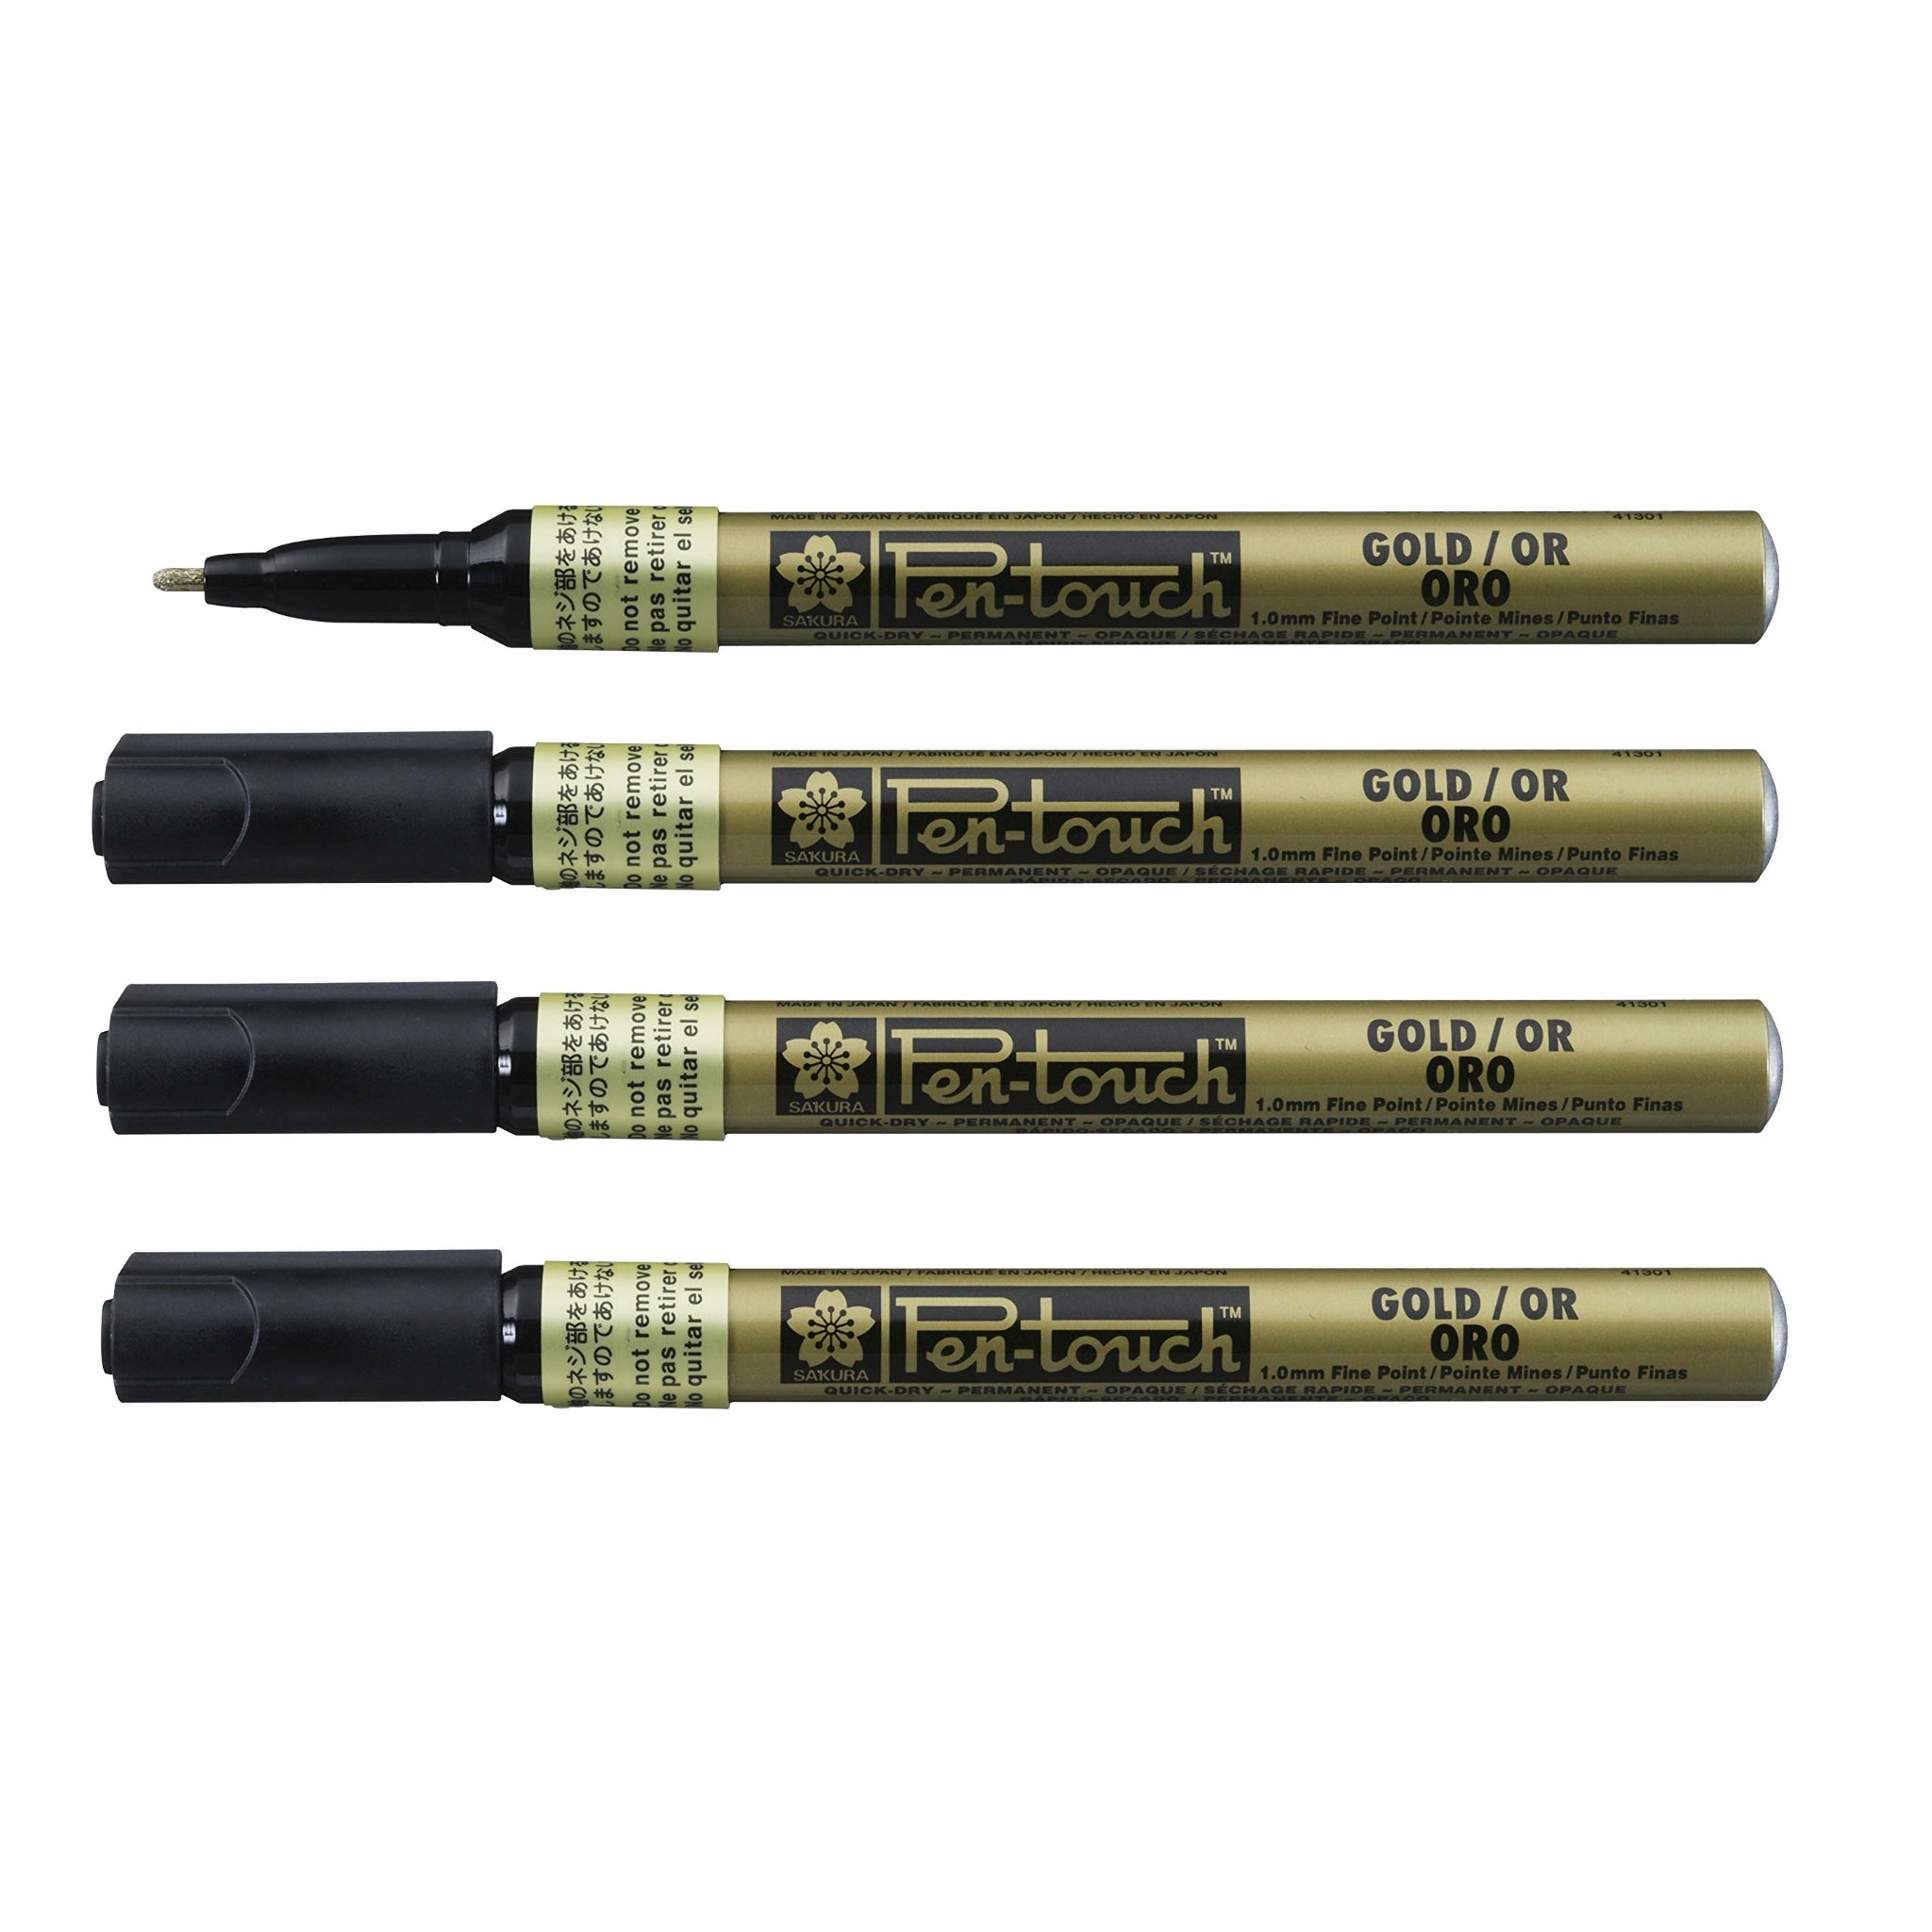 Pen-Touch Gold Metallic Paint Marker - 2mm Tip, Sakura